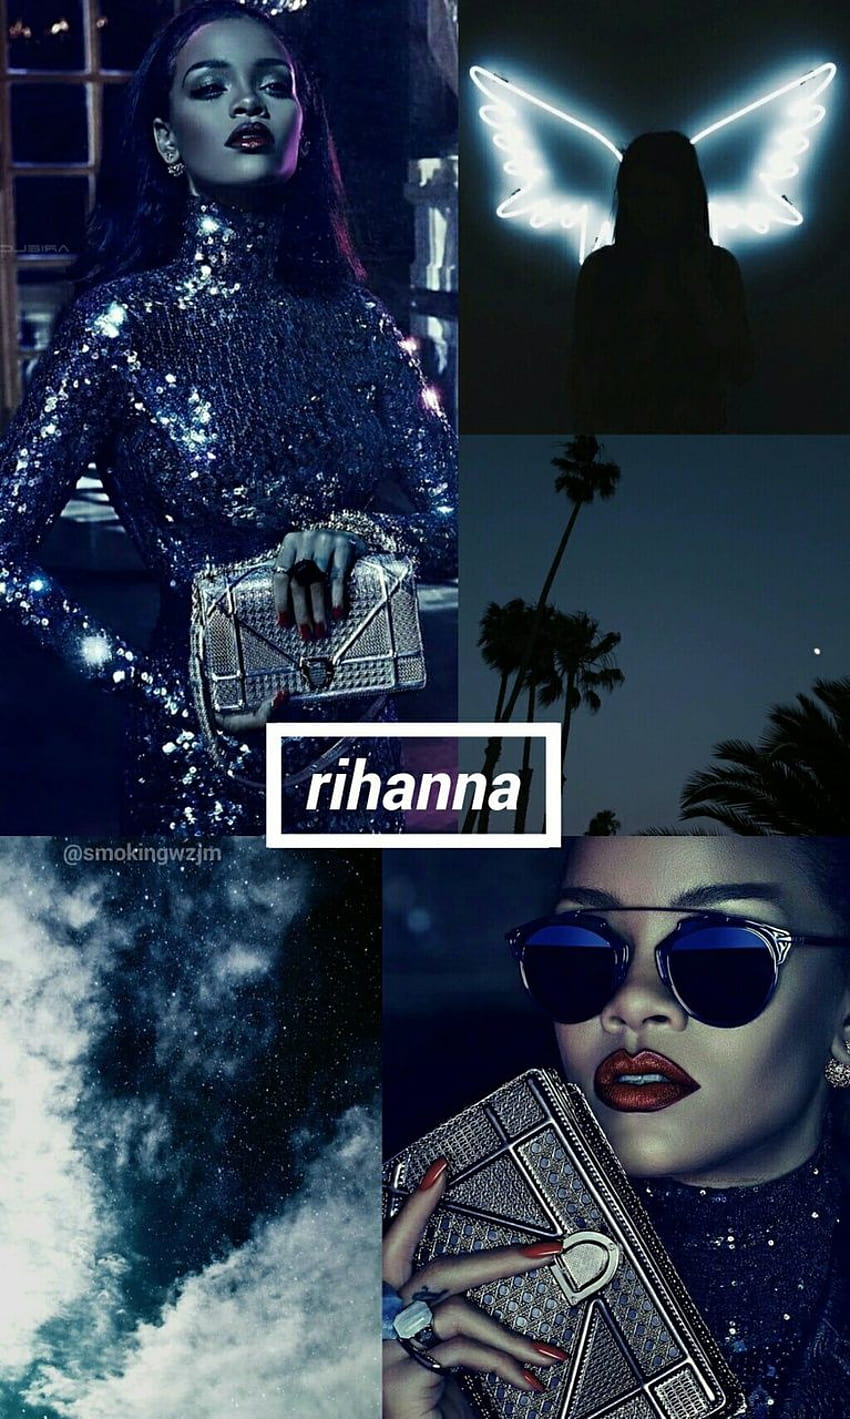 Rihanna wallpaper, rihanna, wallpaper, background, aesthetic, pop star, singer, music, fashion, style - Rihanna